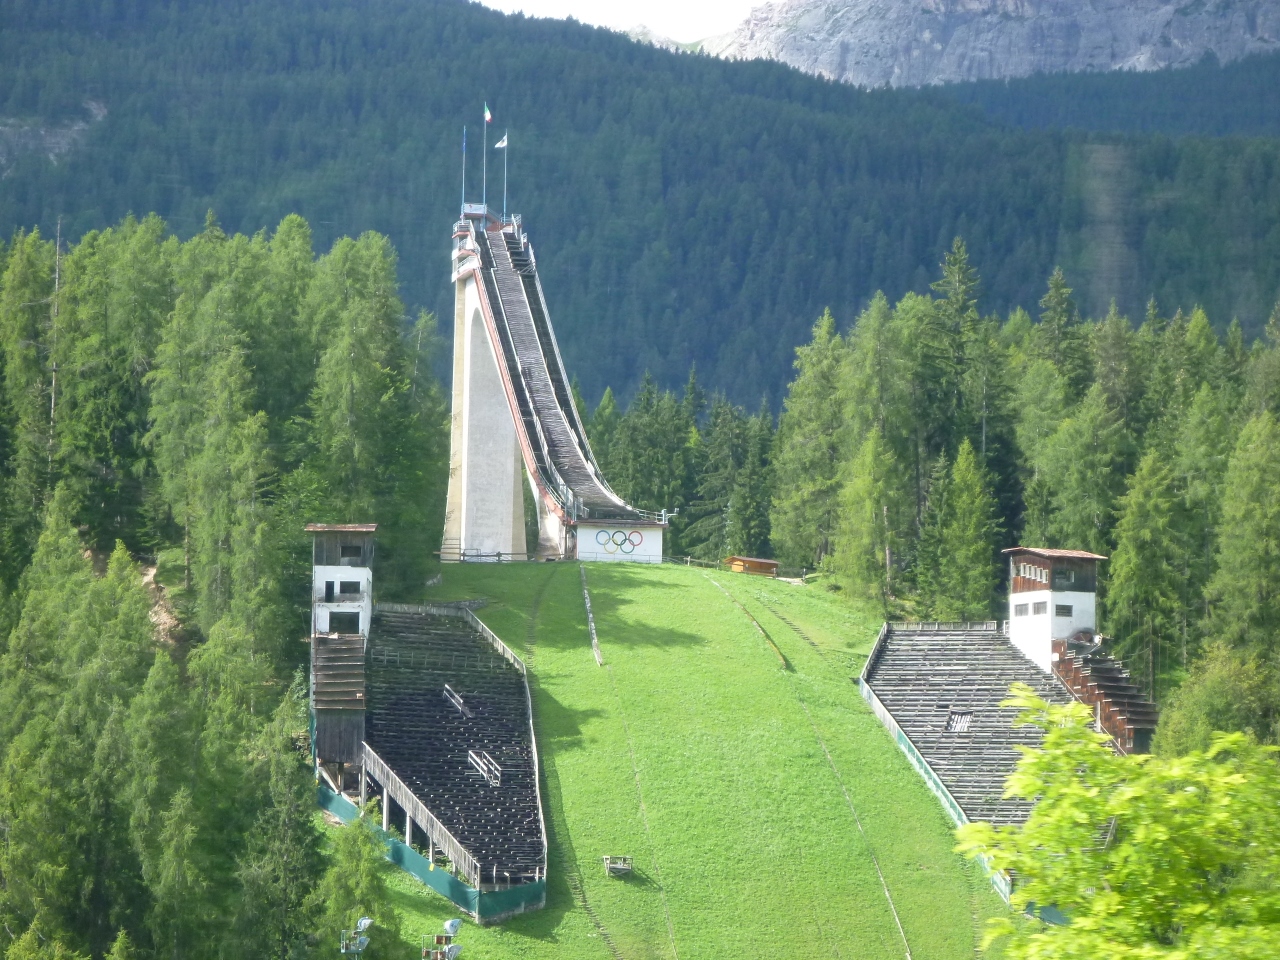 ski jump olympic 1956 cortina calalzo Italy aug 2014